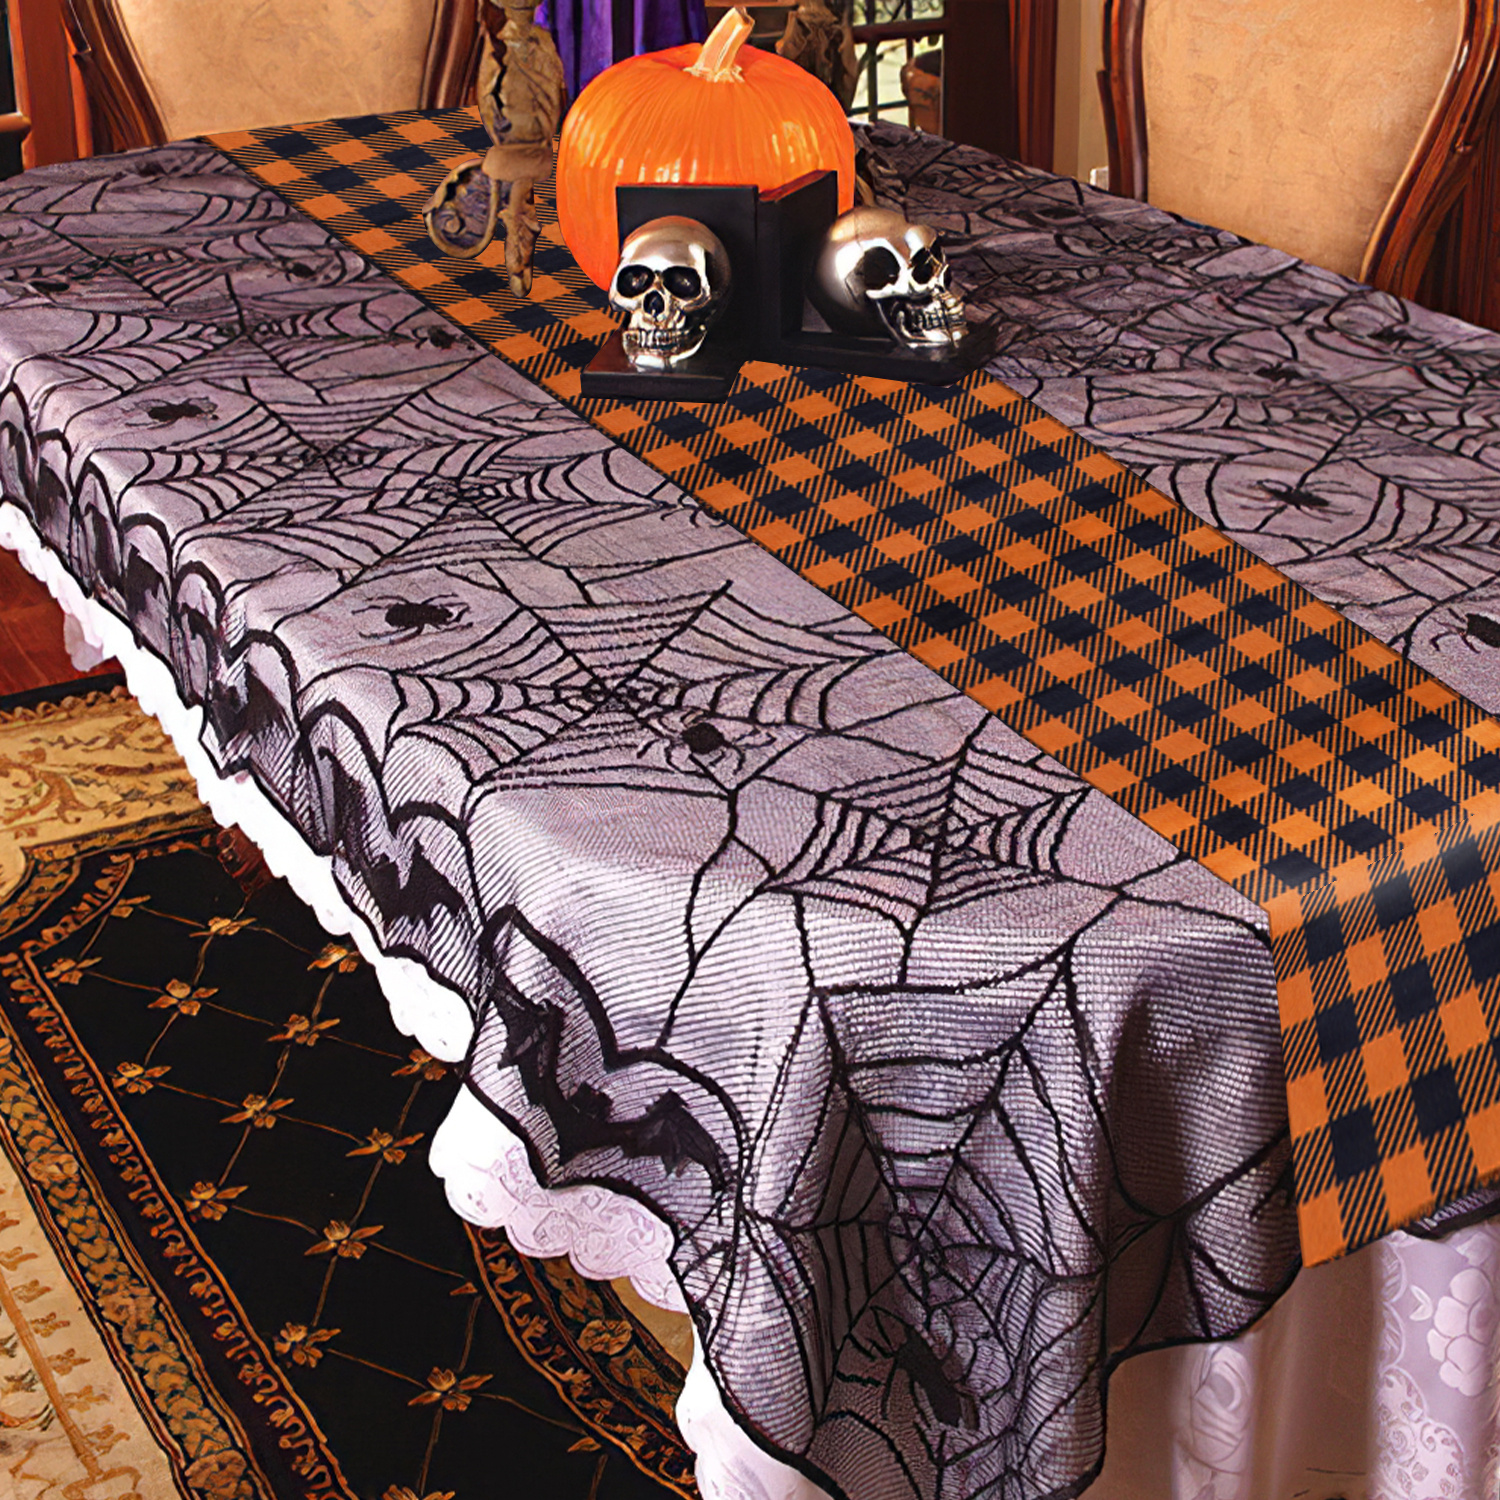 S337 ハロウィン テーブルクロス クモの巣のディナーテーブル 装飾 おしゃれ 最大58%OFFクーポン - ハロウィン